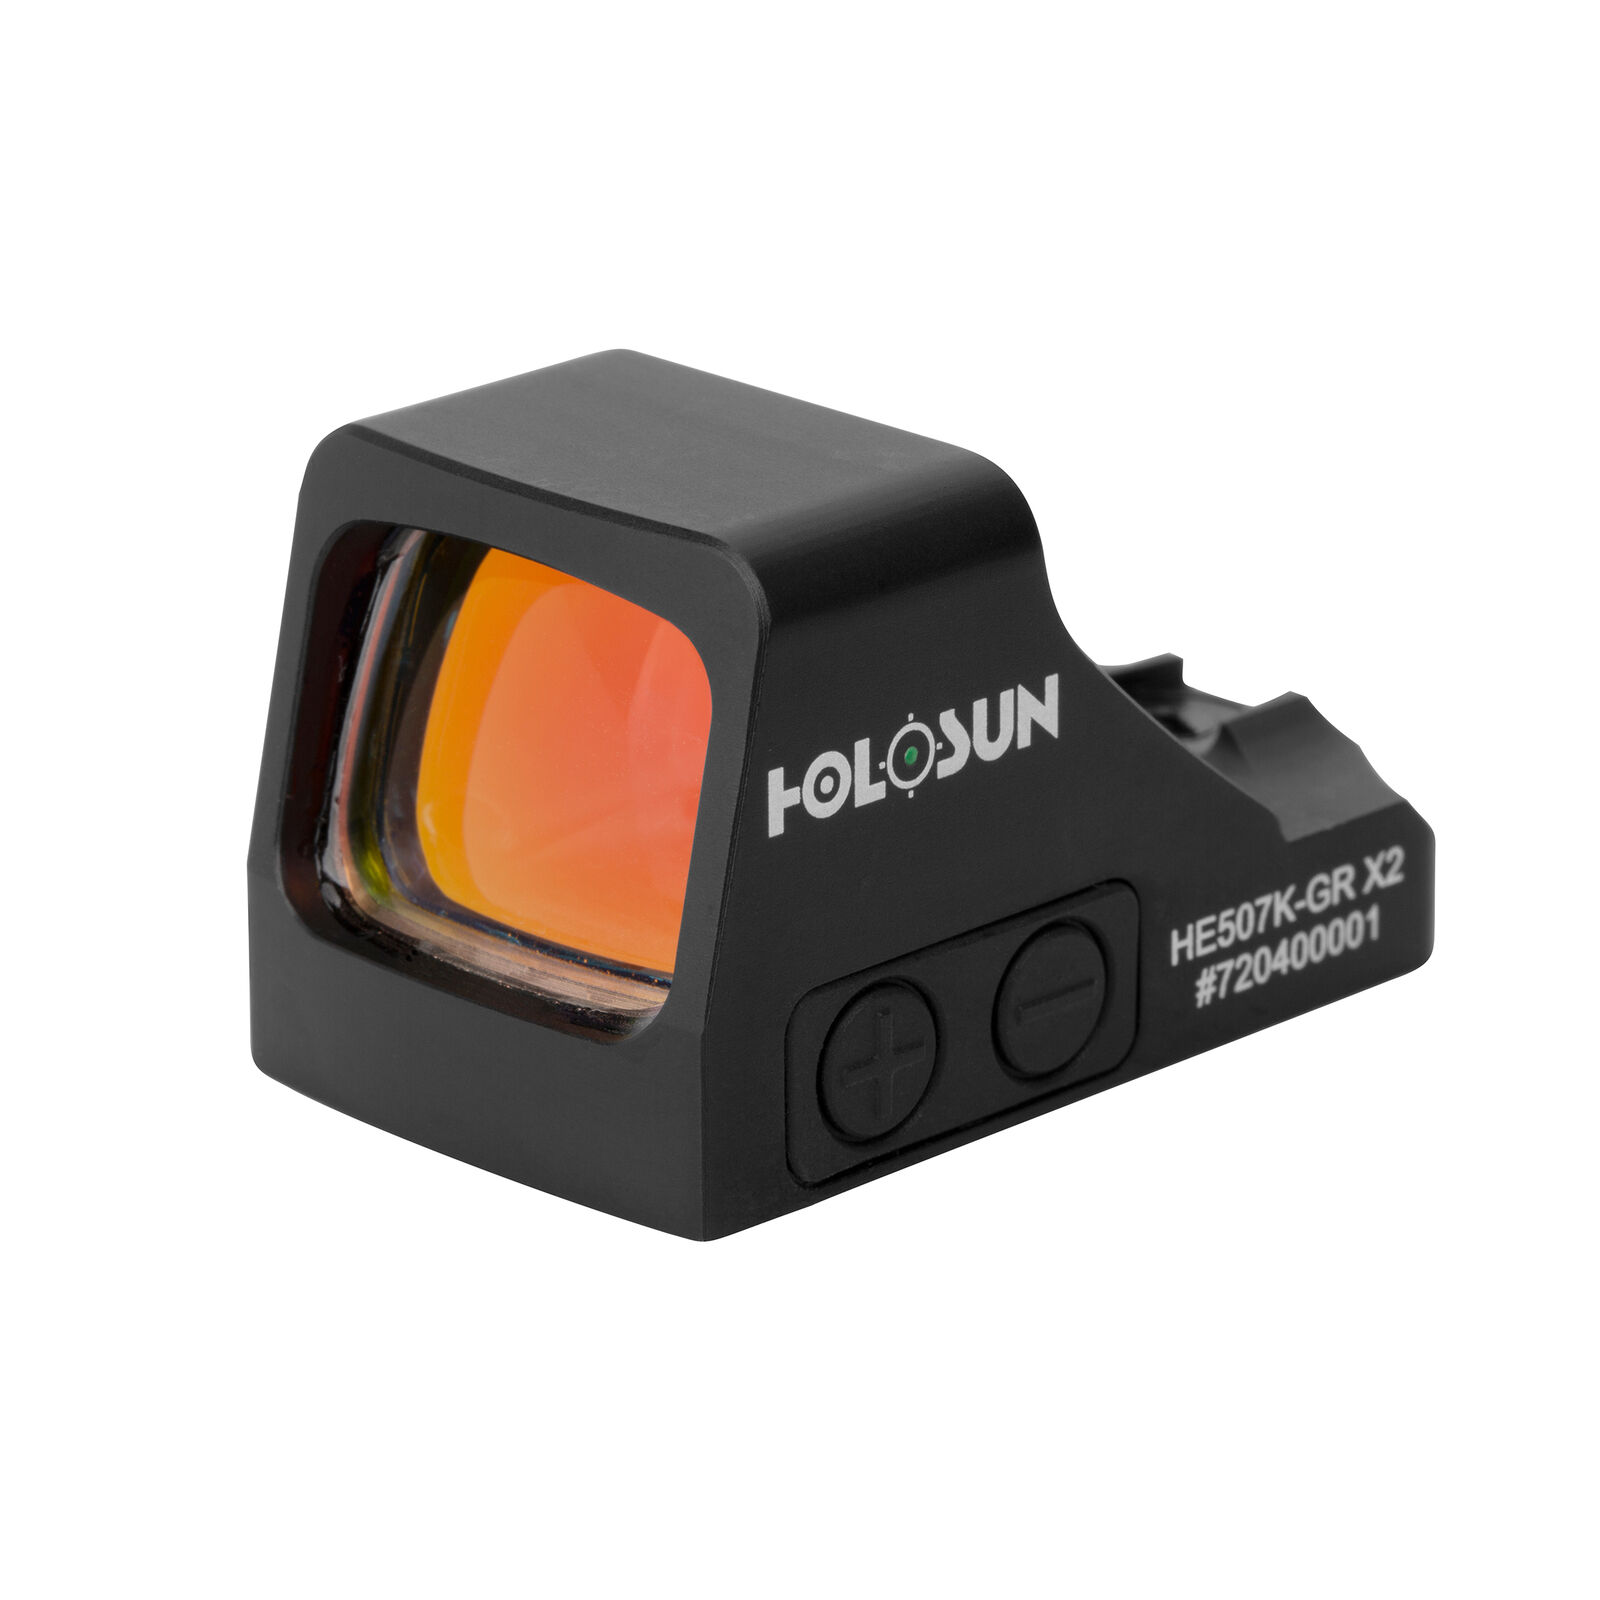 Holosun HE507K-GR X2 Elite Open Reflex Optical Multi-Reticle Green Dot Sight